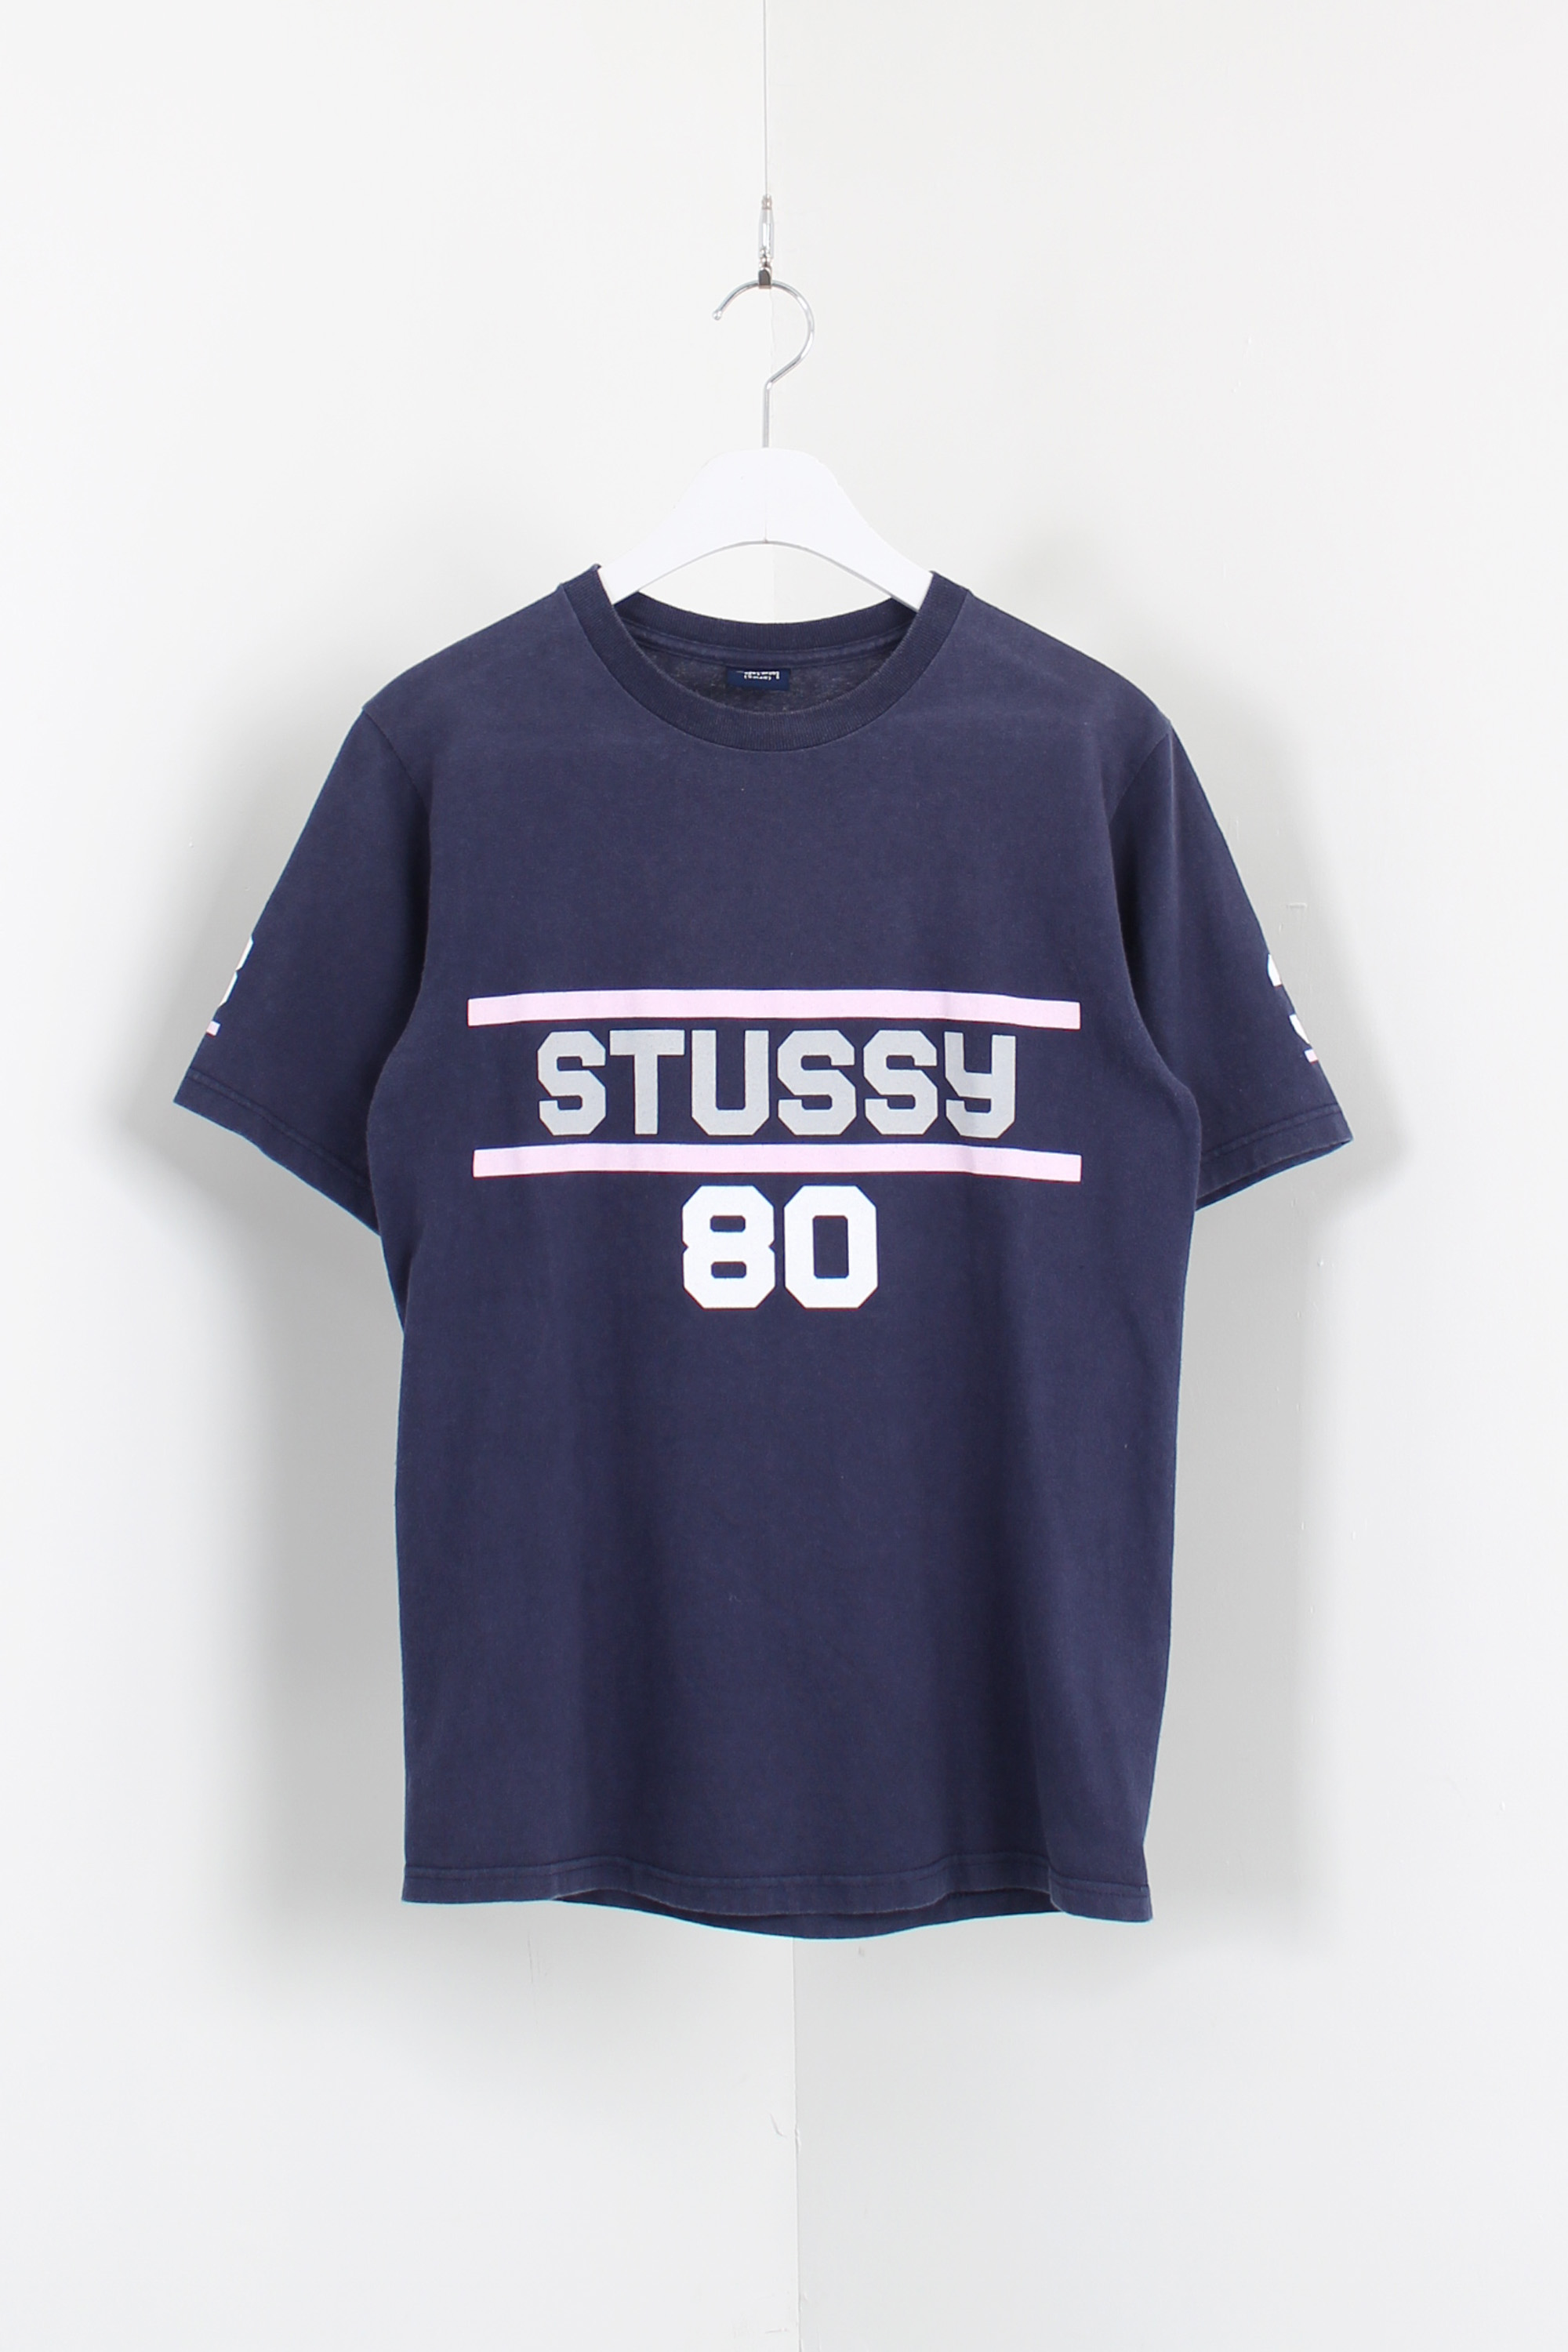 00s STUSSY t-shirt